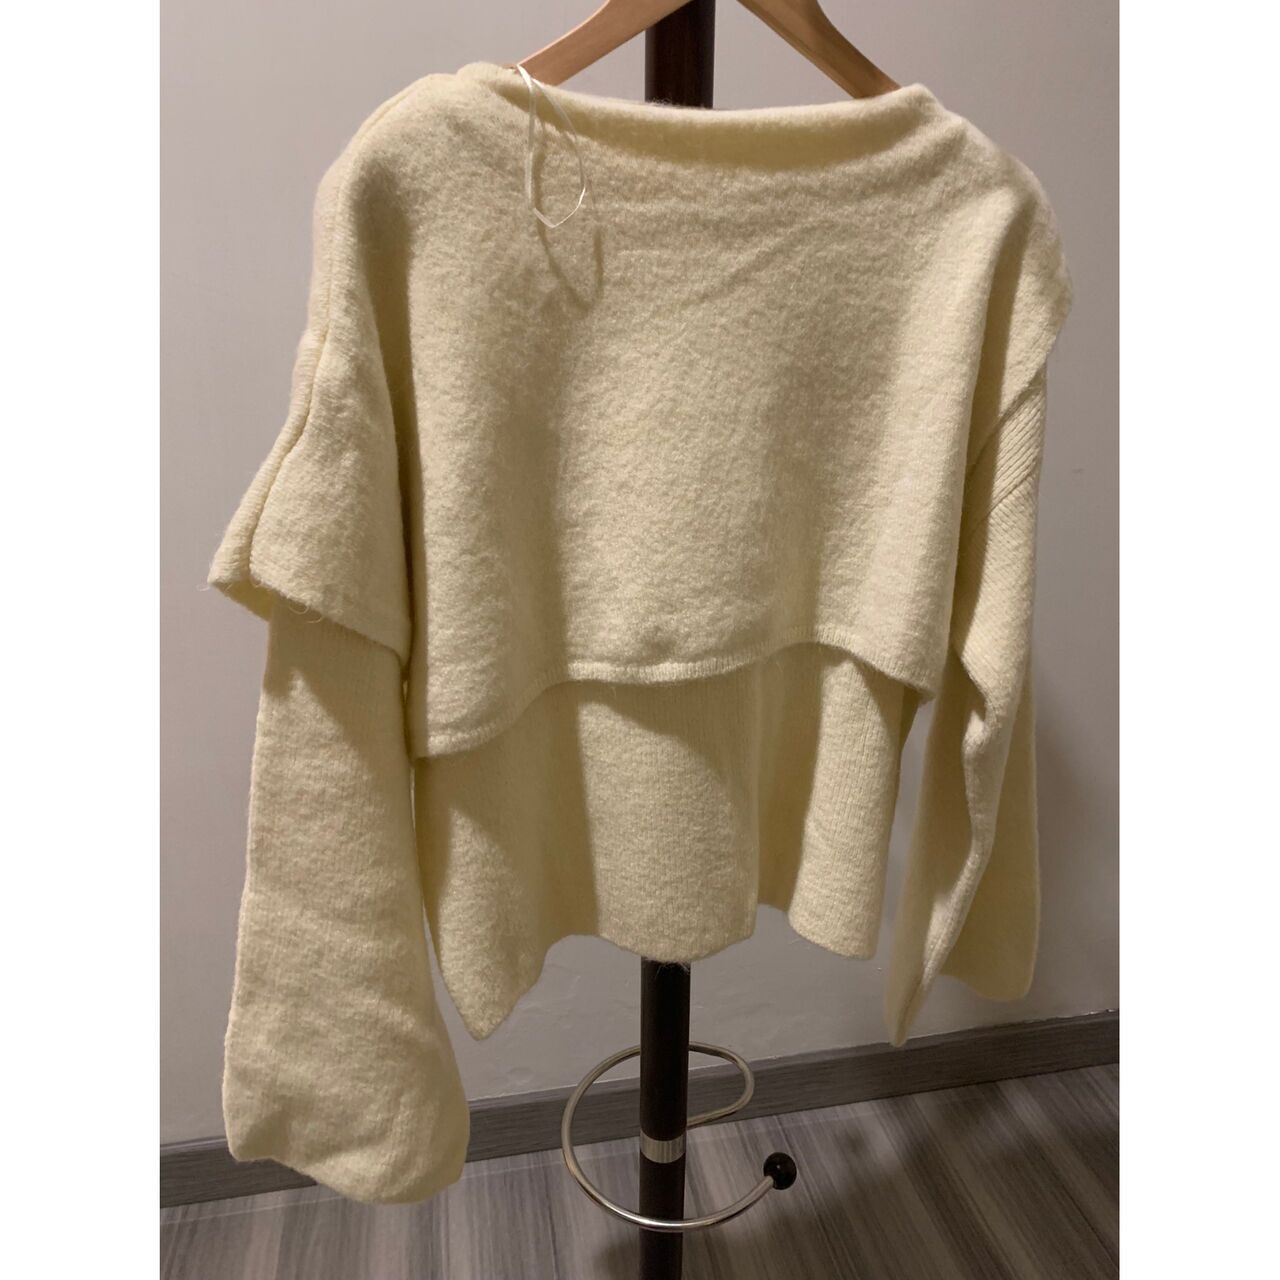 Zara Minimalist Knit Sweater Jumper With Cape Collar - Cream 